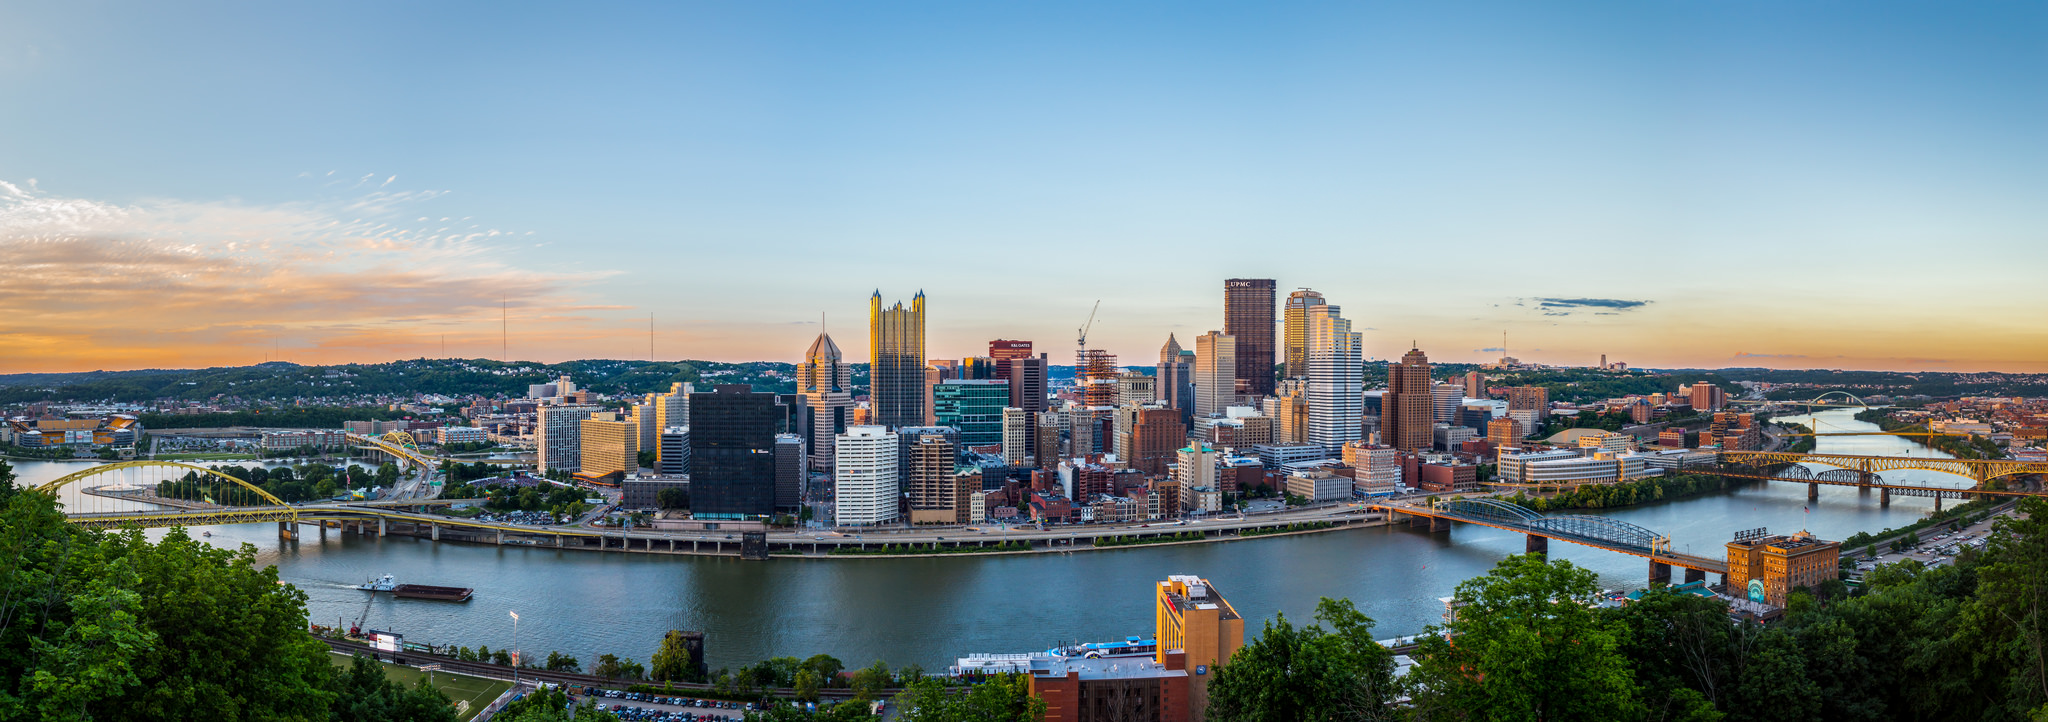 Pittsburgh skyline by dan Chmil